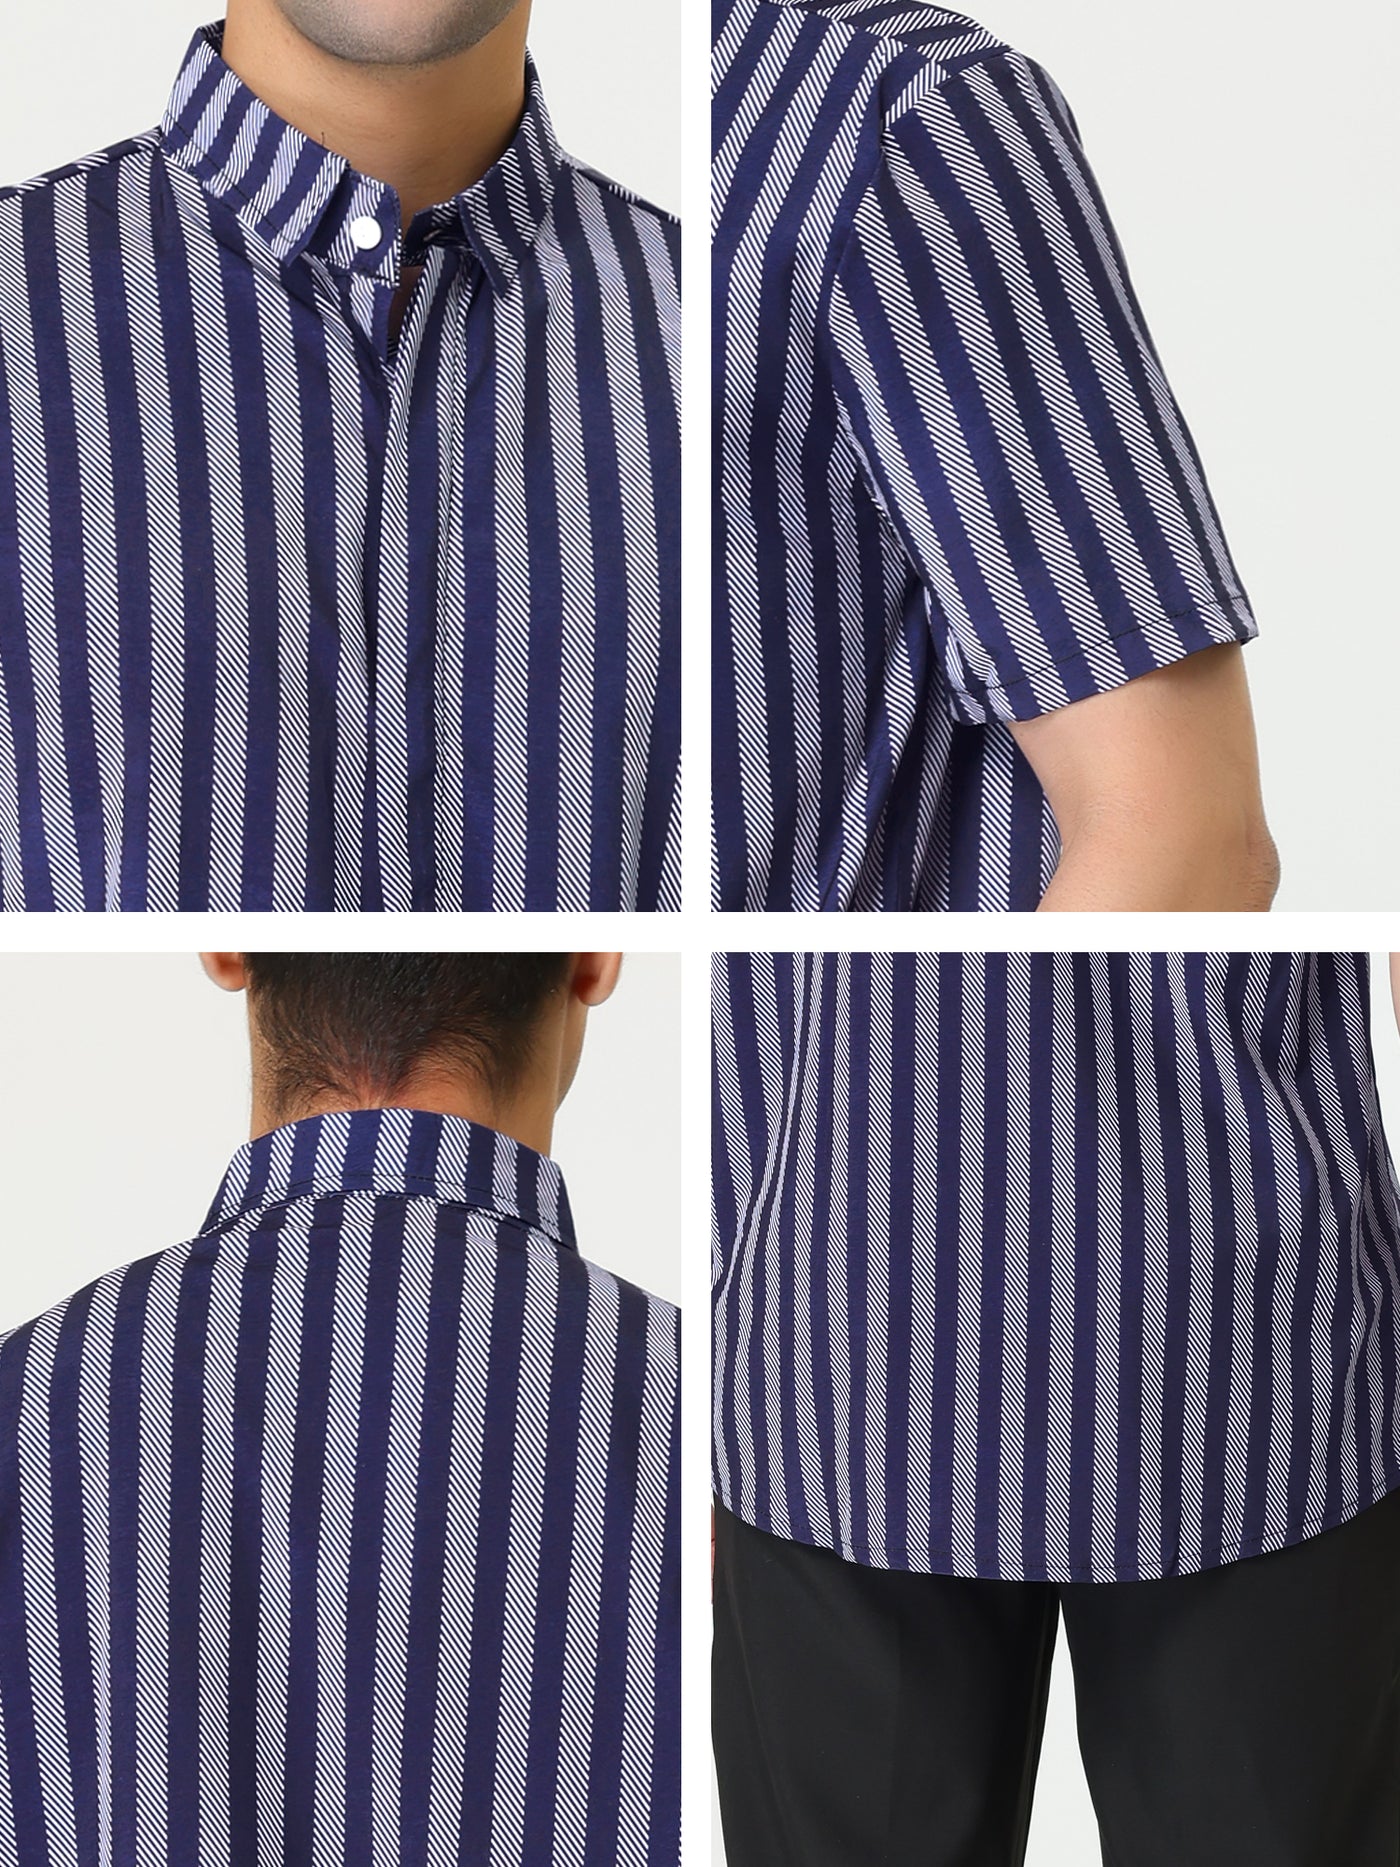 Bublédon Striped Lapel Short Sleeve Button Down Dress Shirts